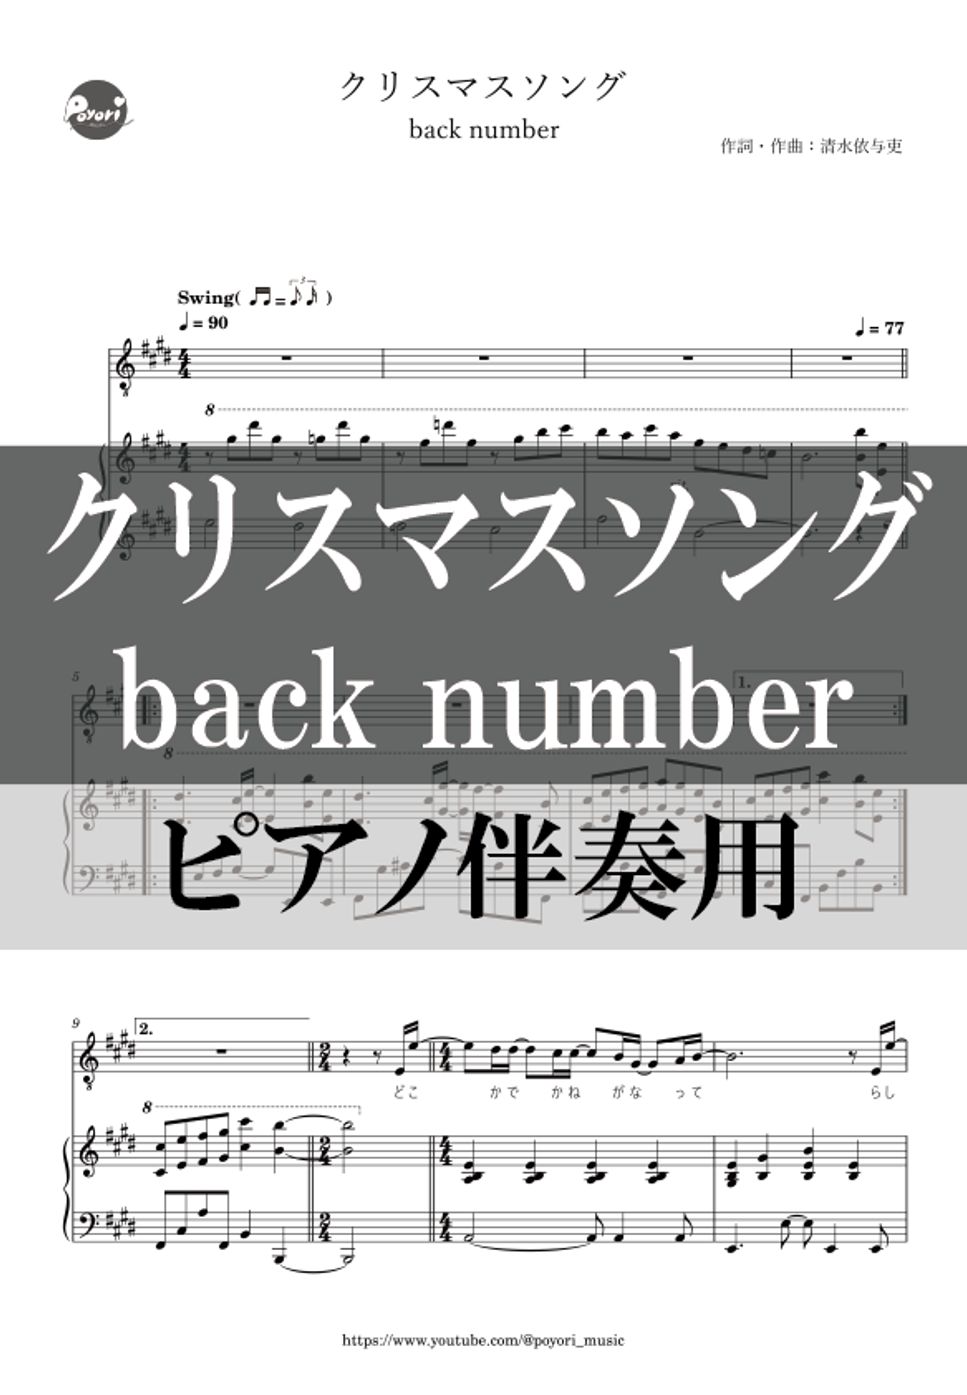 back number - クリスマスソング (ピアノ伴奏/弾き語り) by ぽより